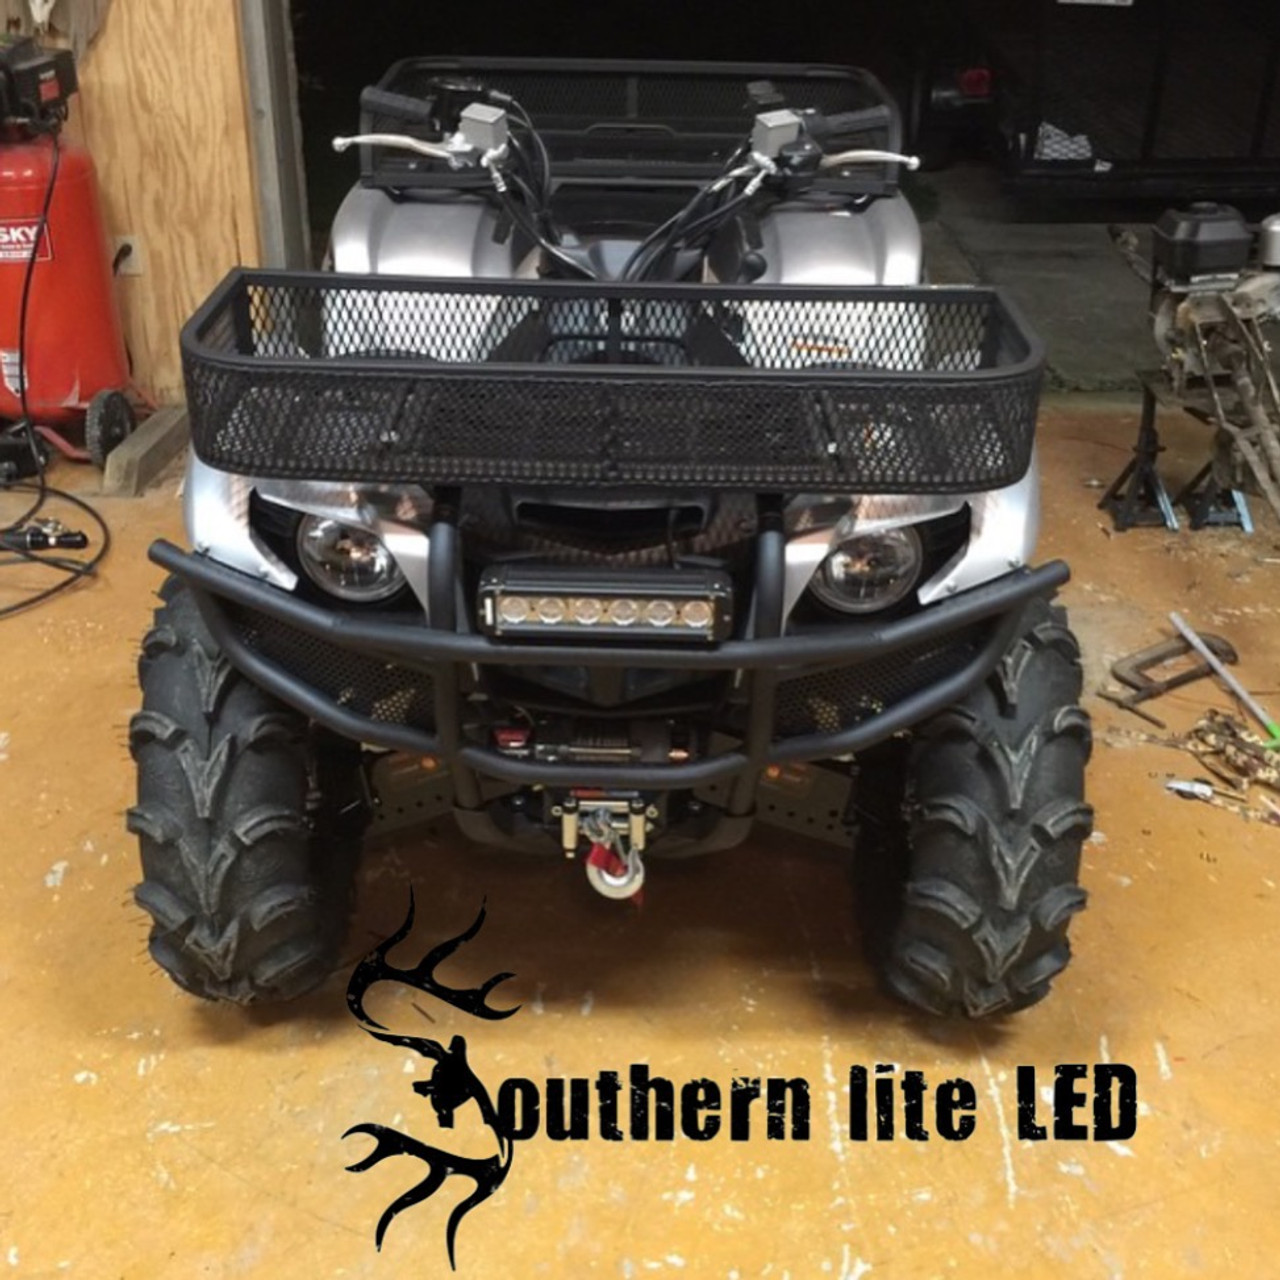 11" Southern lite LED Light Bar (Includes 60 Watt Single Row Light and Wiring Harness)